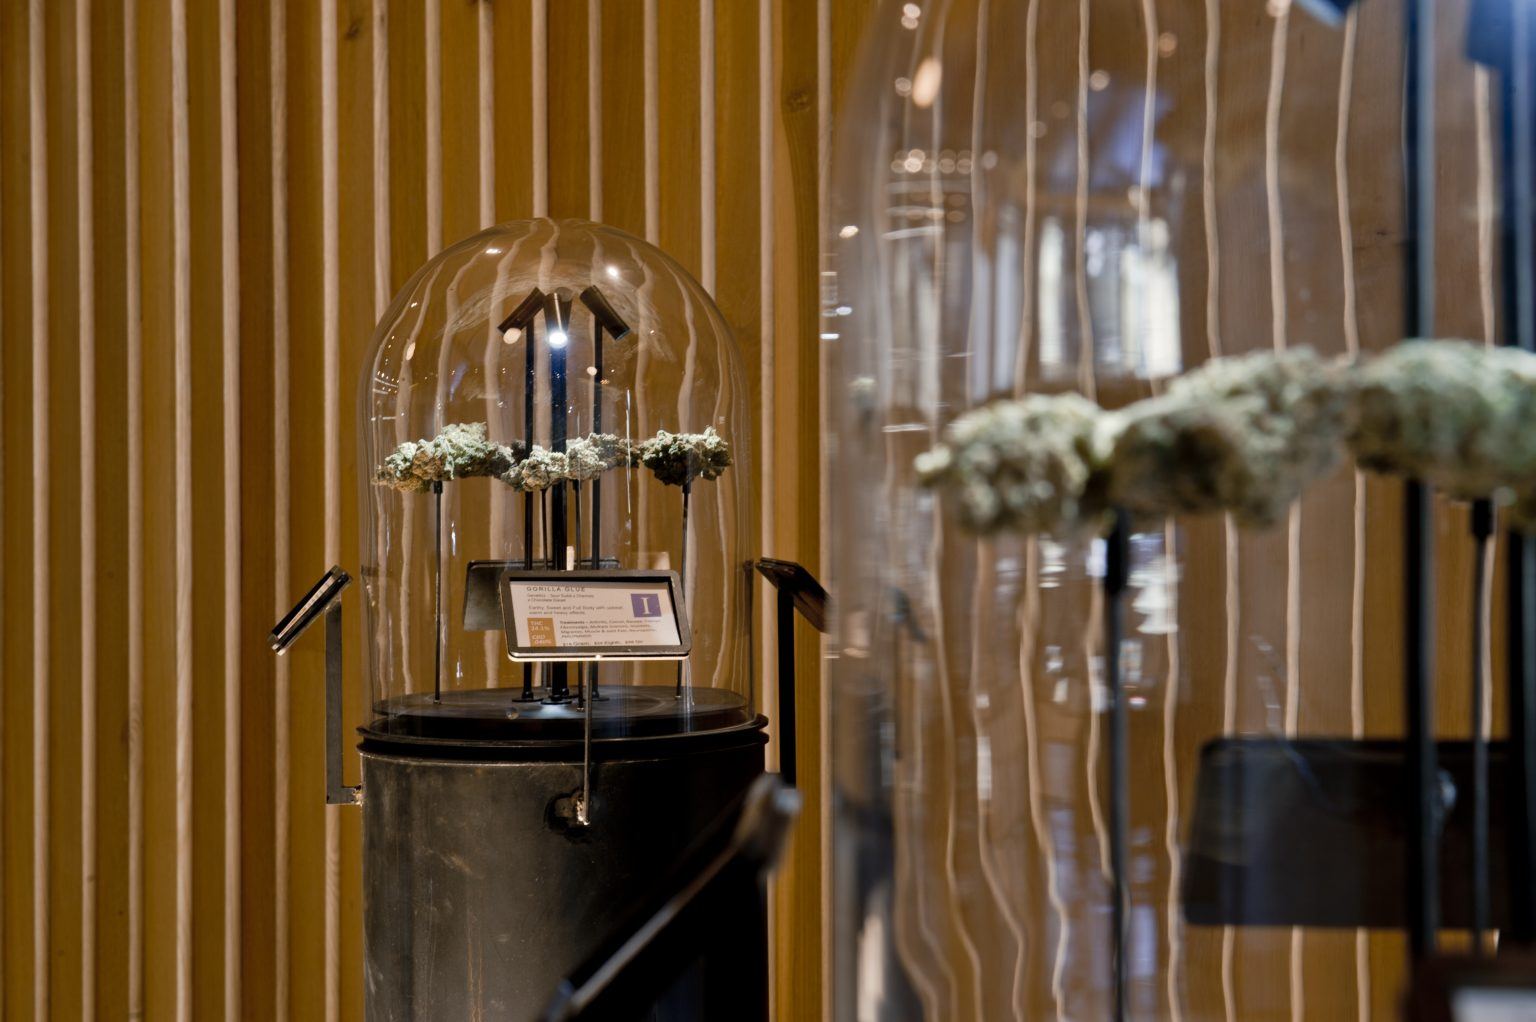 cannabis case display